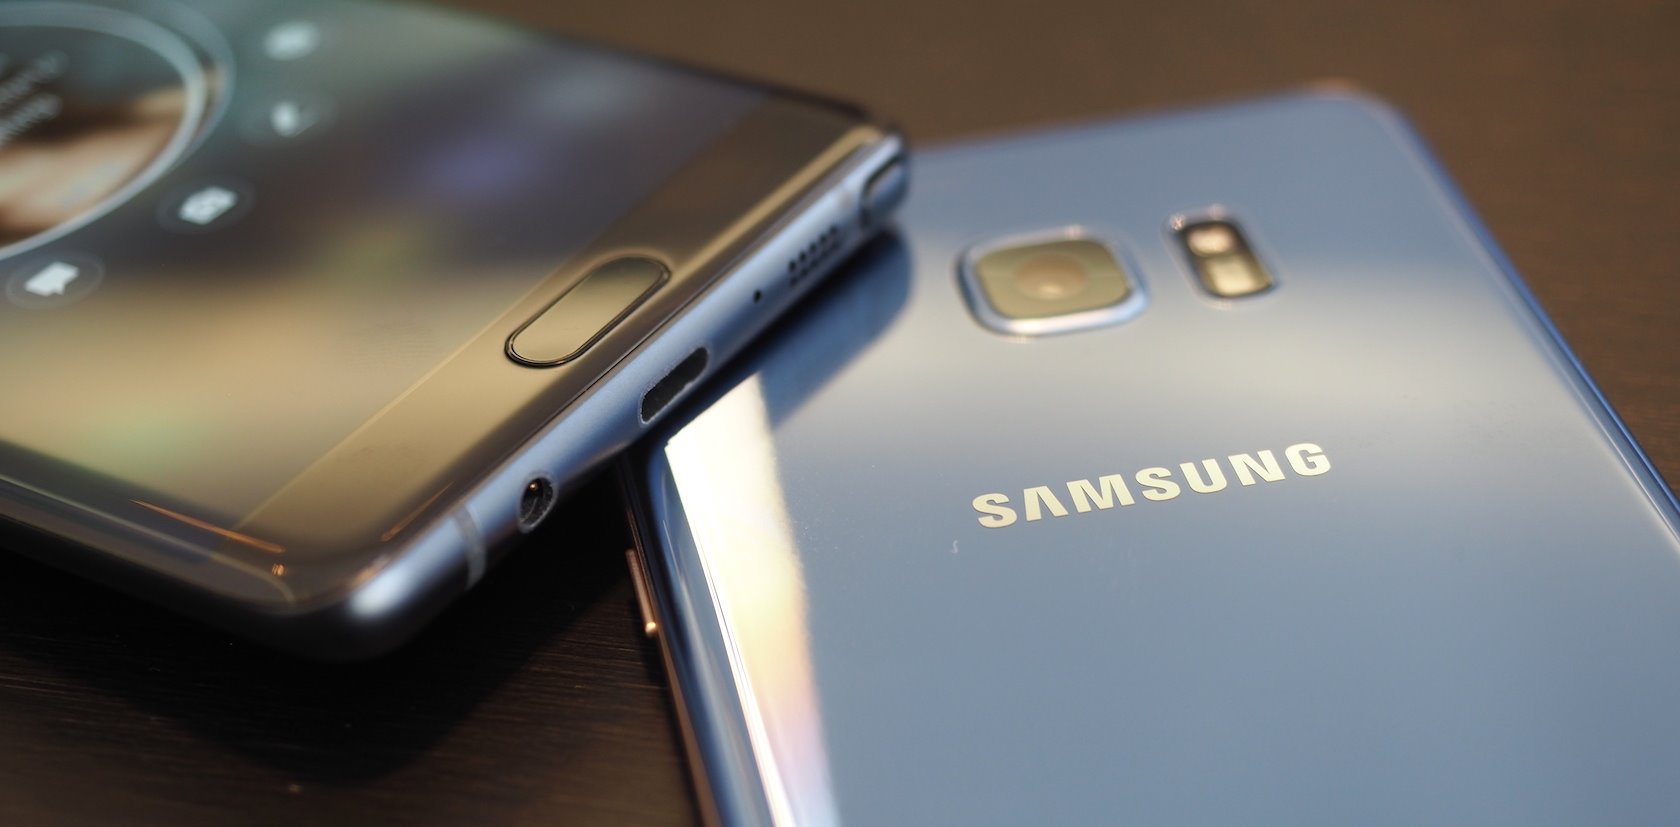 noutatile Samsung Galaxy Note7 pret lansare specificatii imagini